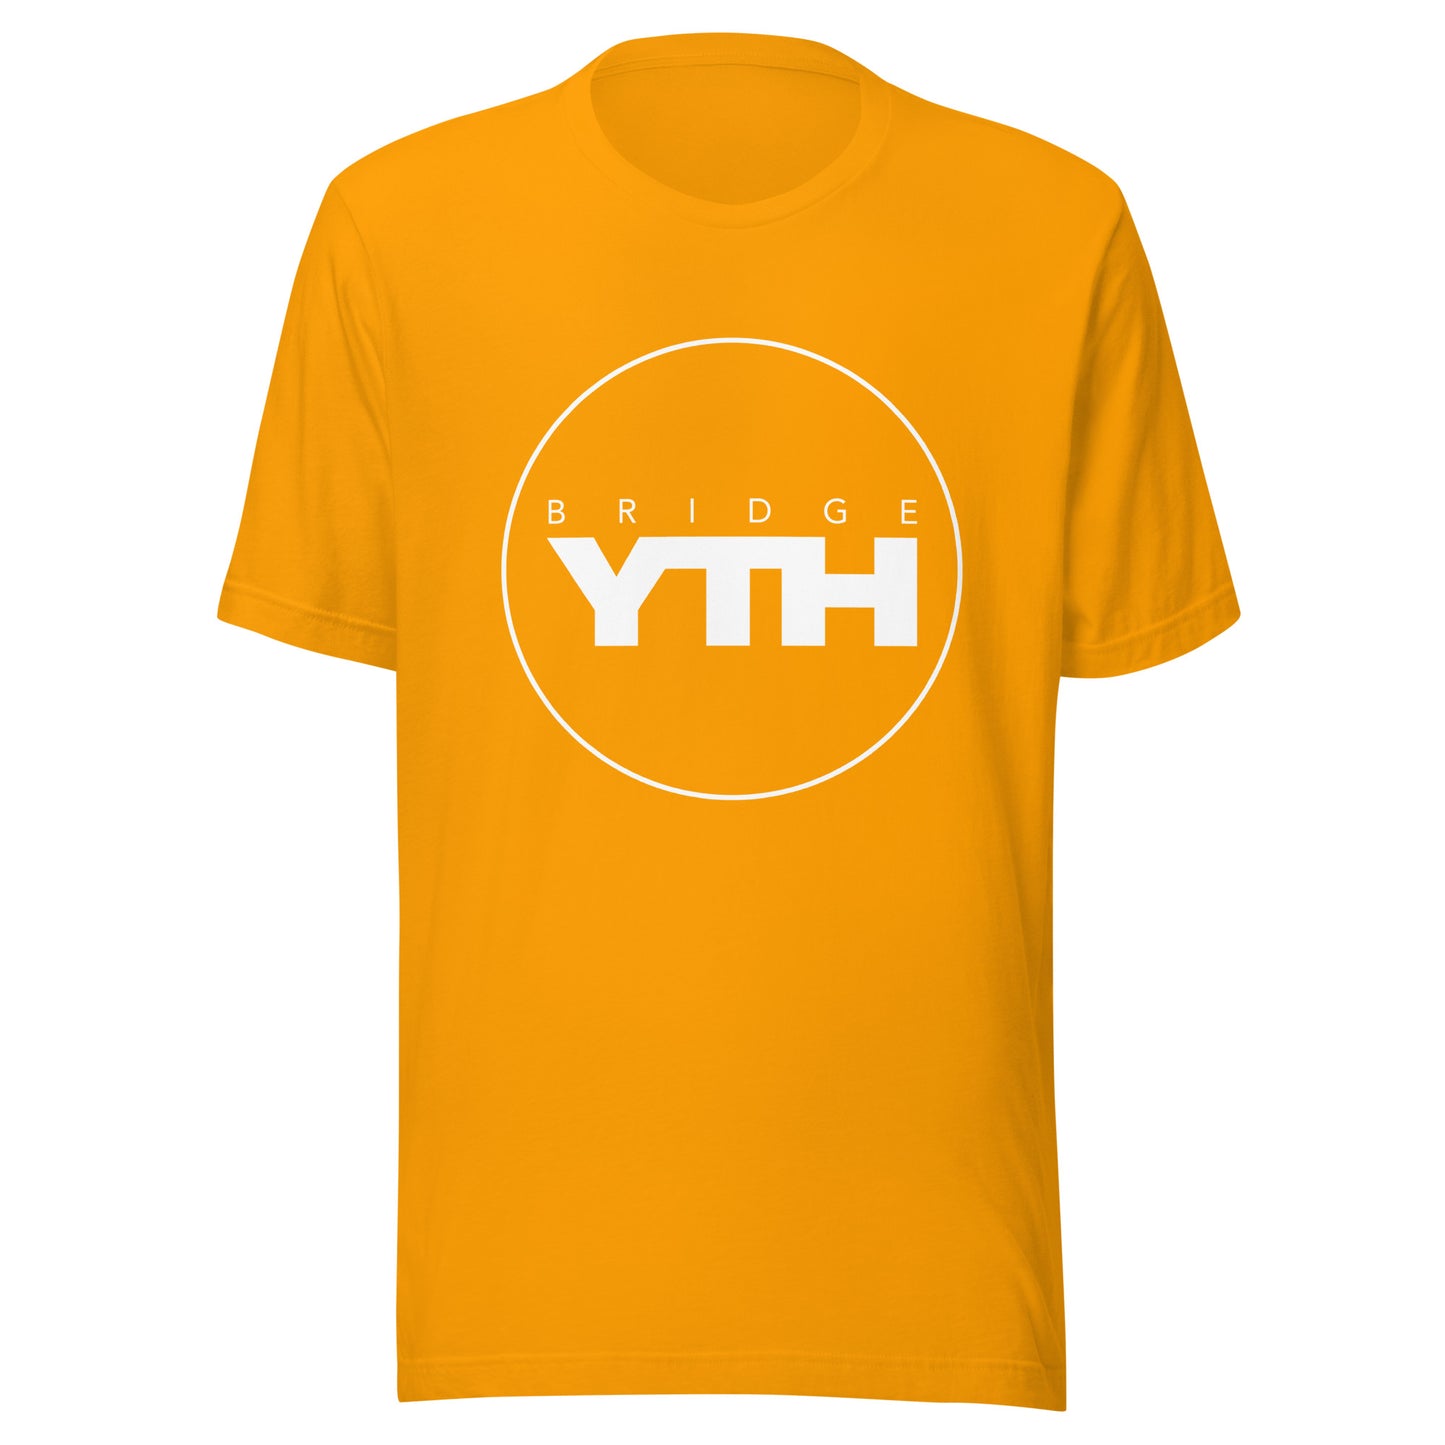 Bridge Youth - Shirt